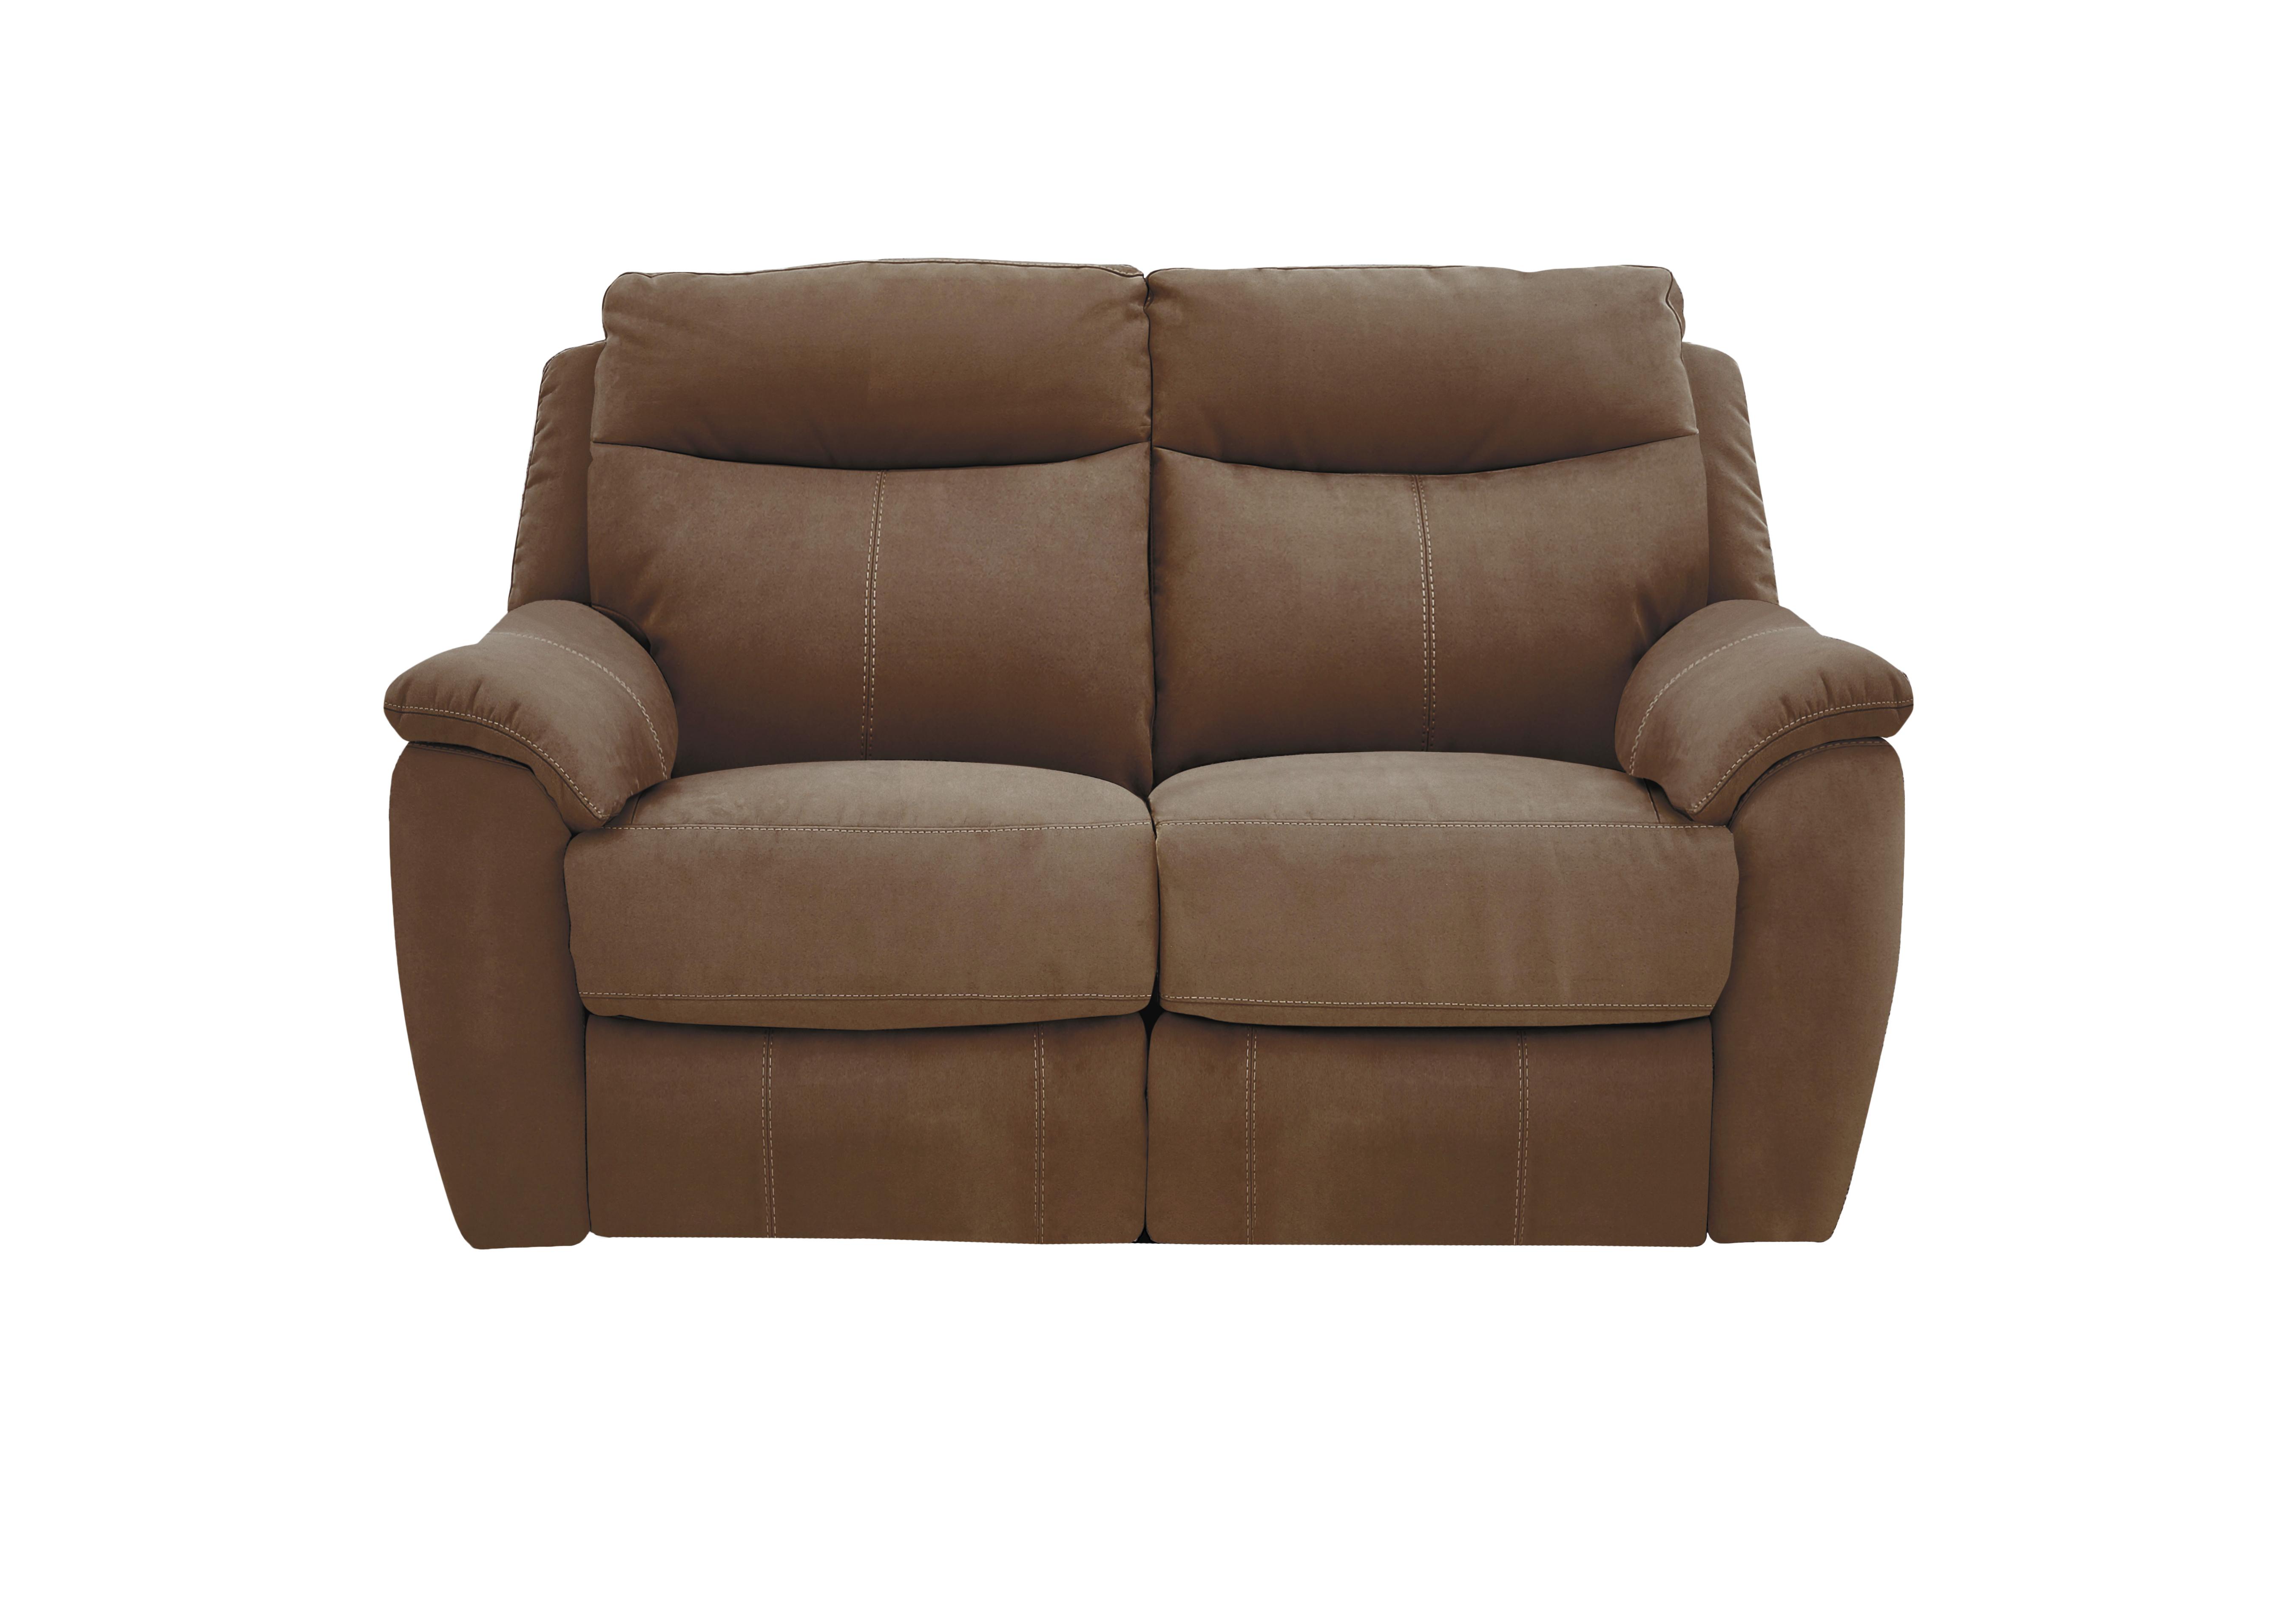 Snug 2 Seater Fabric Sofa in Bfa-Blj-R05 Hazelnut on Furniture Village